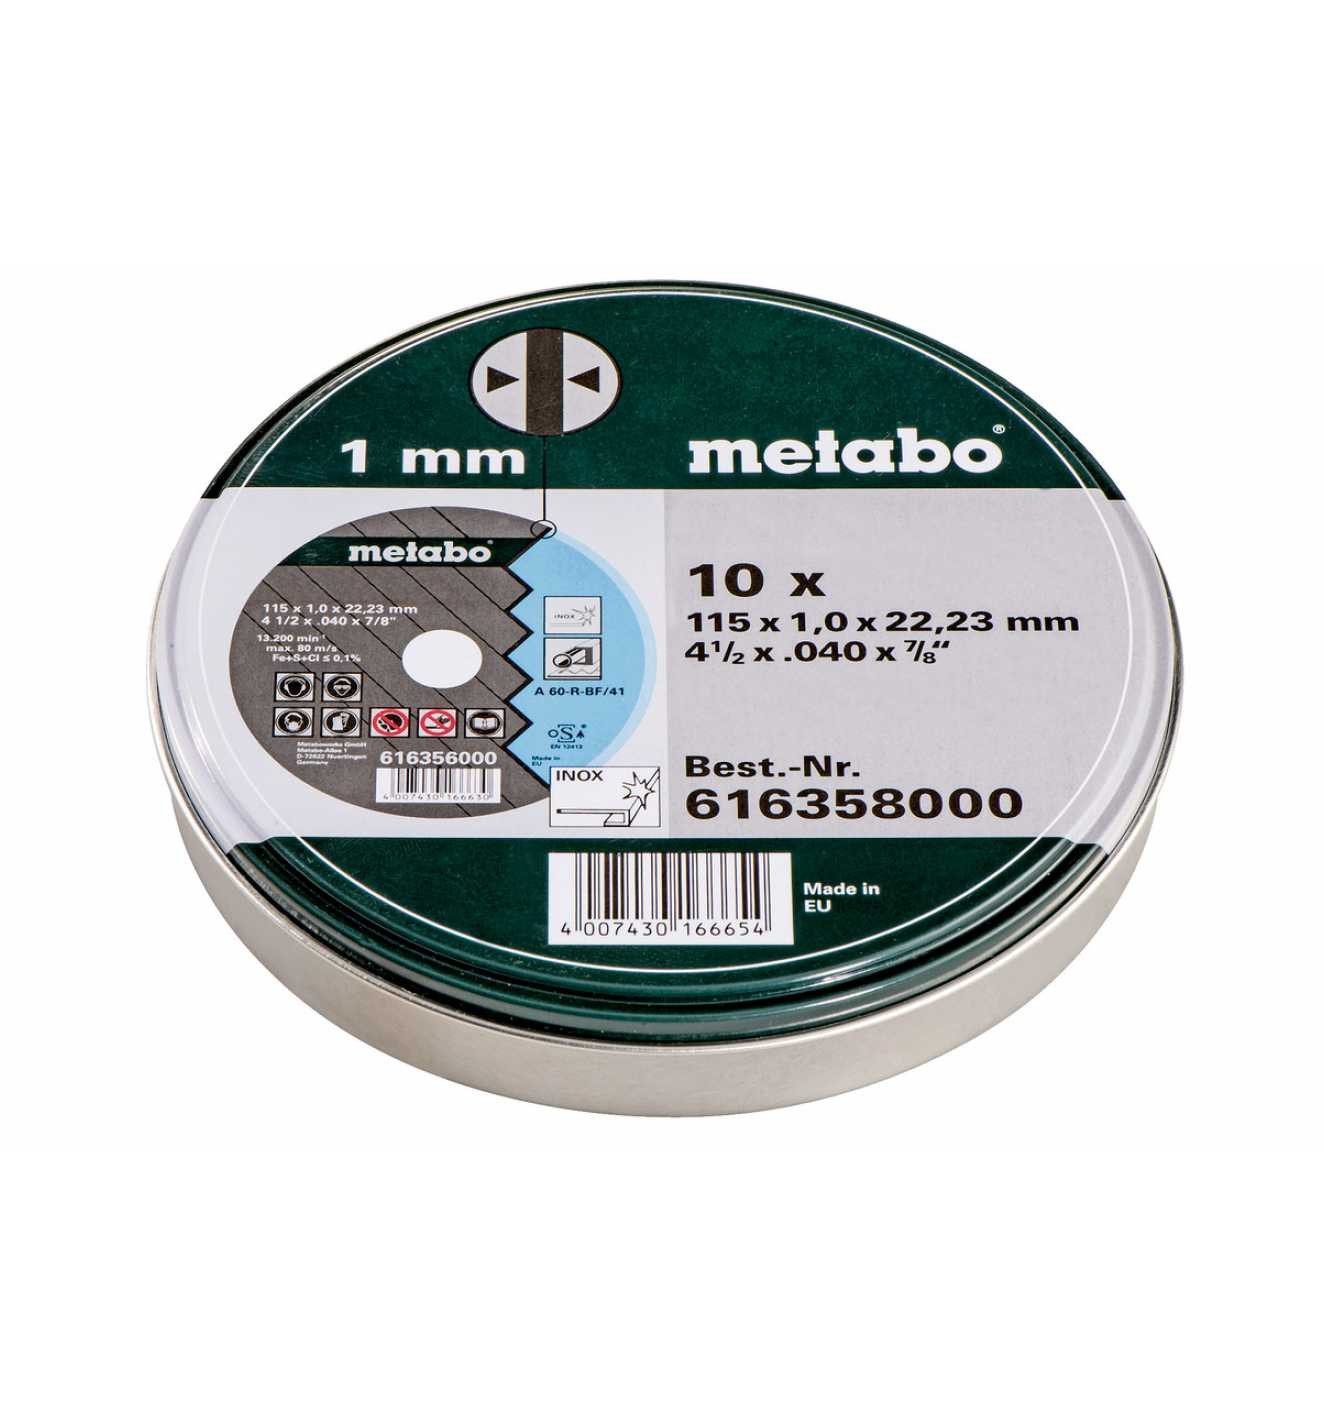 Metabo Professional Trennscheiben SP, Ø 115 mm, Inox, TF 41, in Blechdose